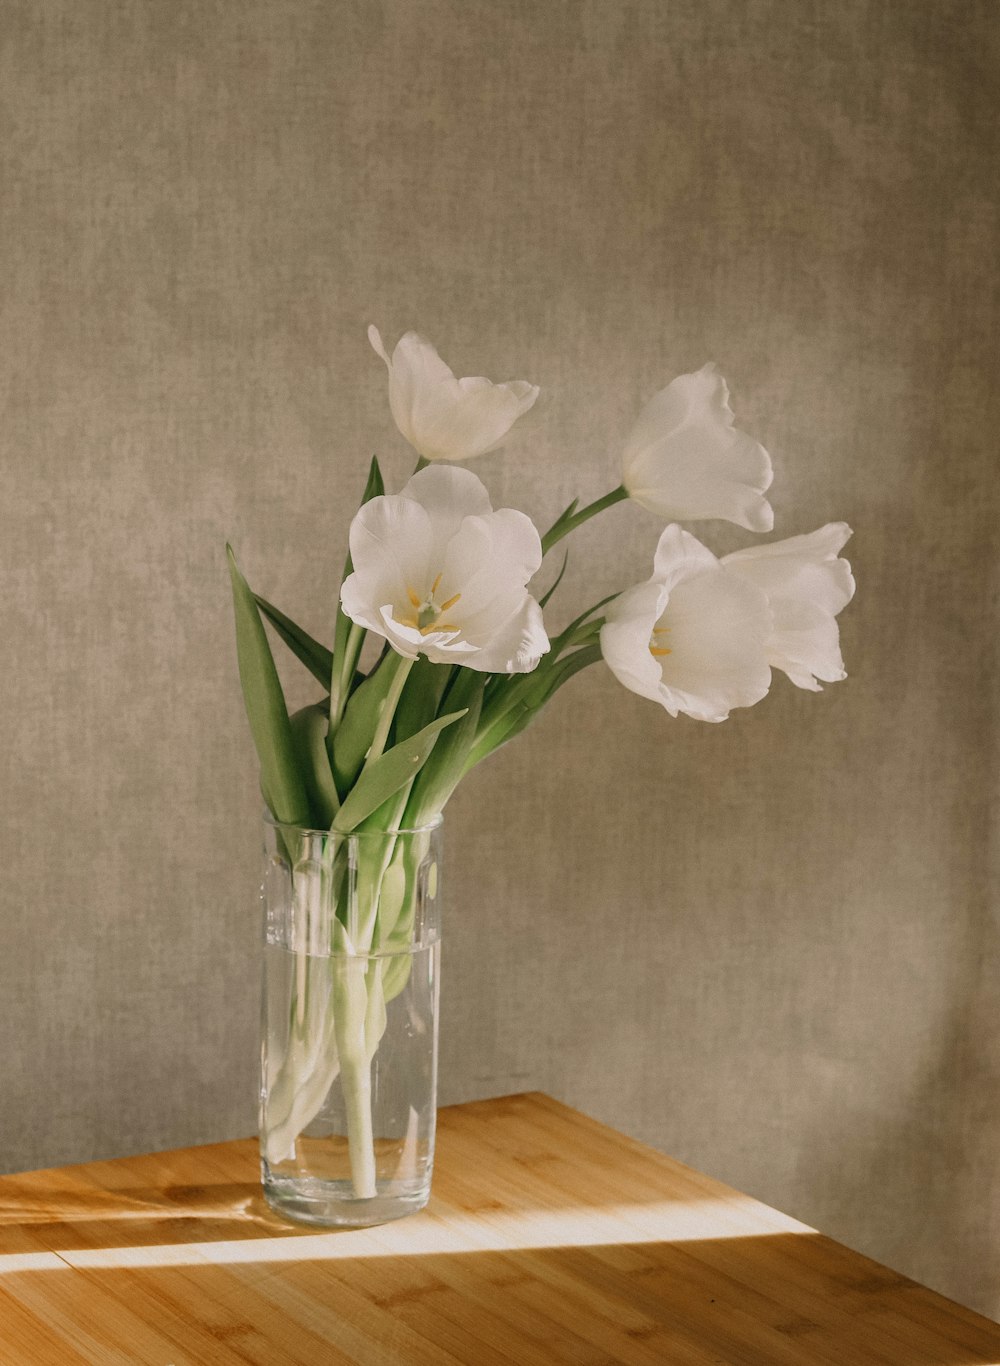 White flower in clear glass vase photo – Free Flower Image on Unsplash